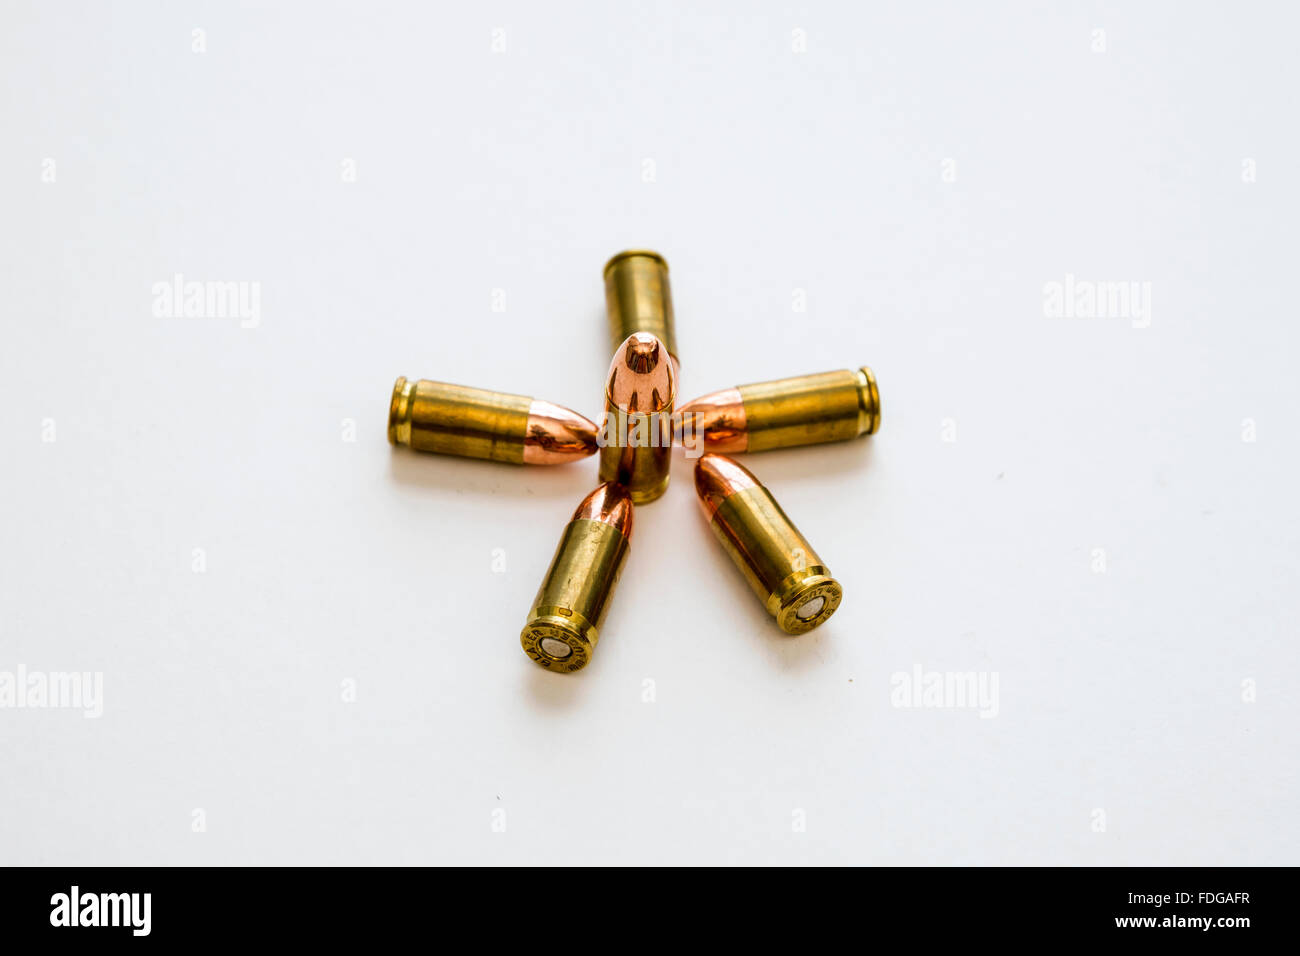 Rifle Bullet Gun Powder Isolated Stock Photo 460032955